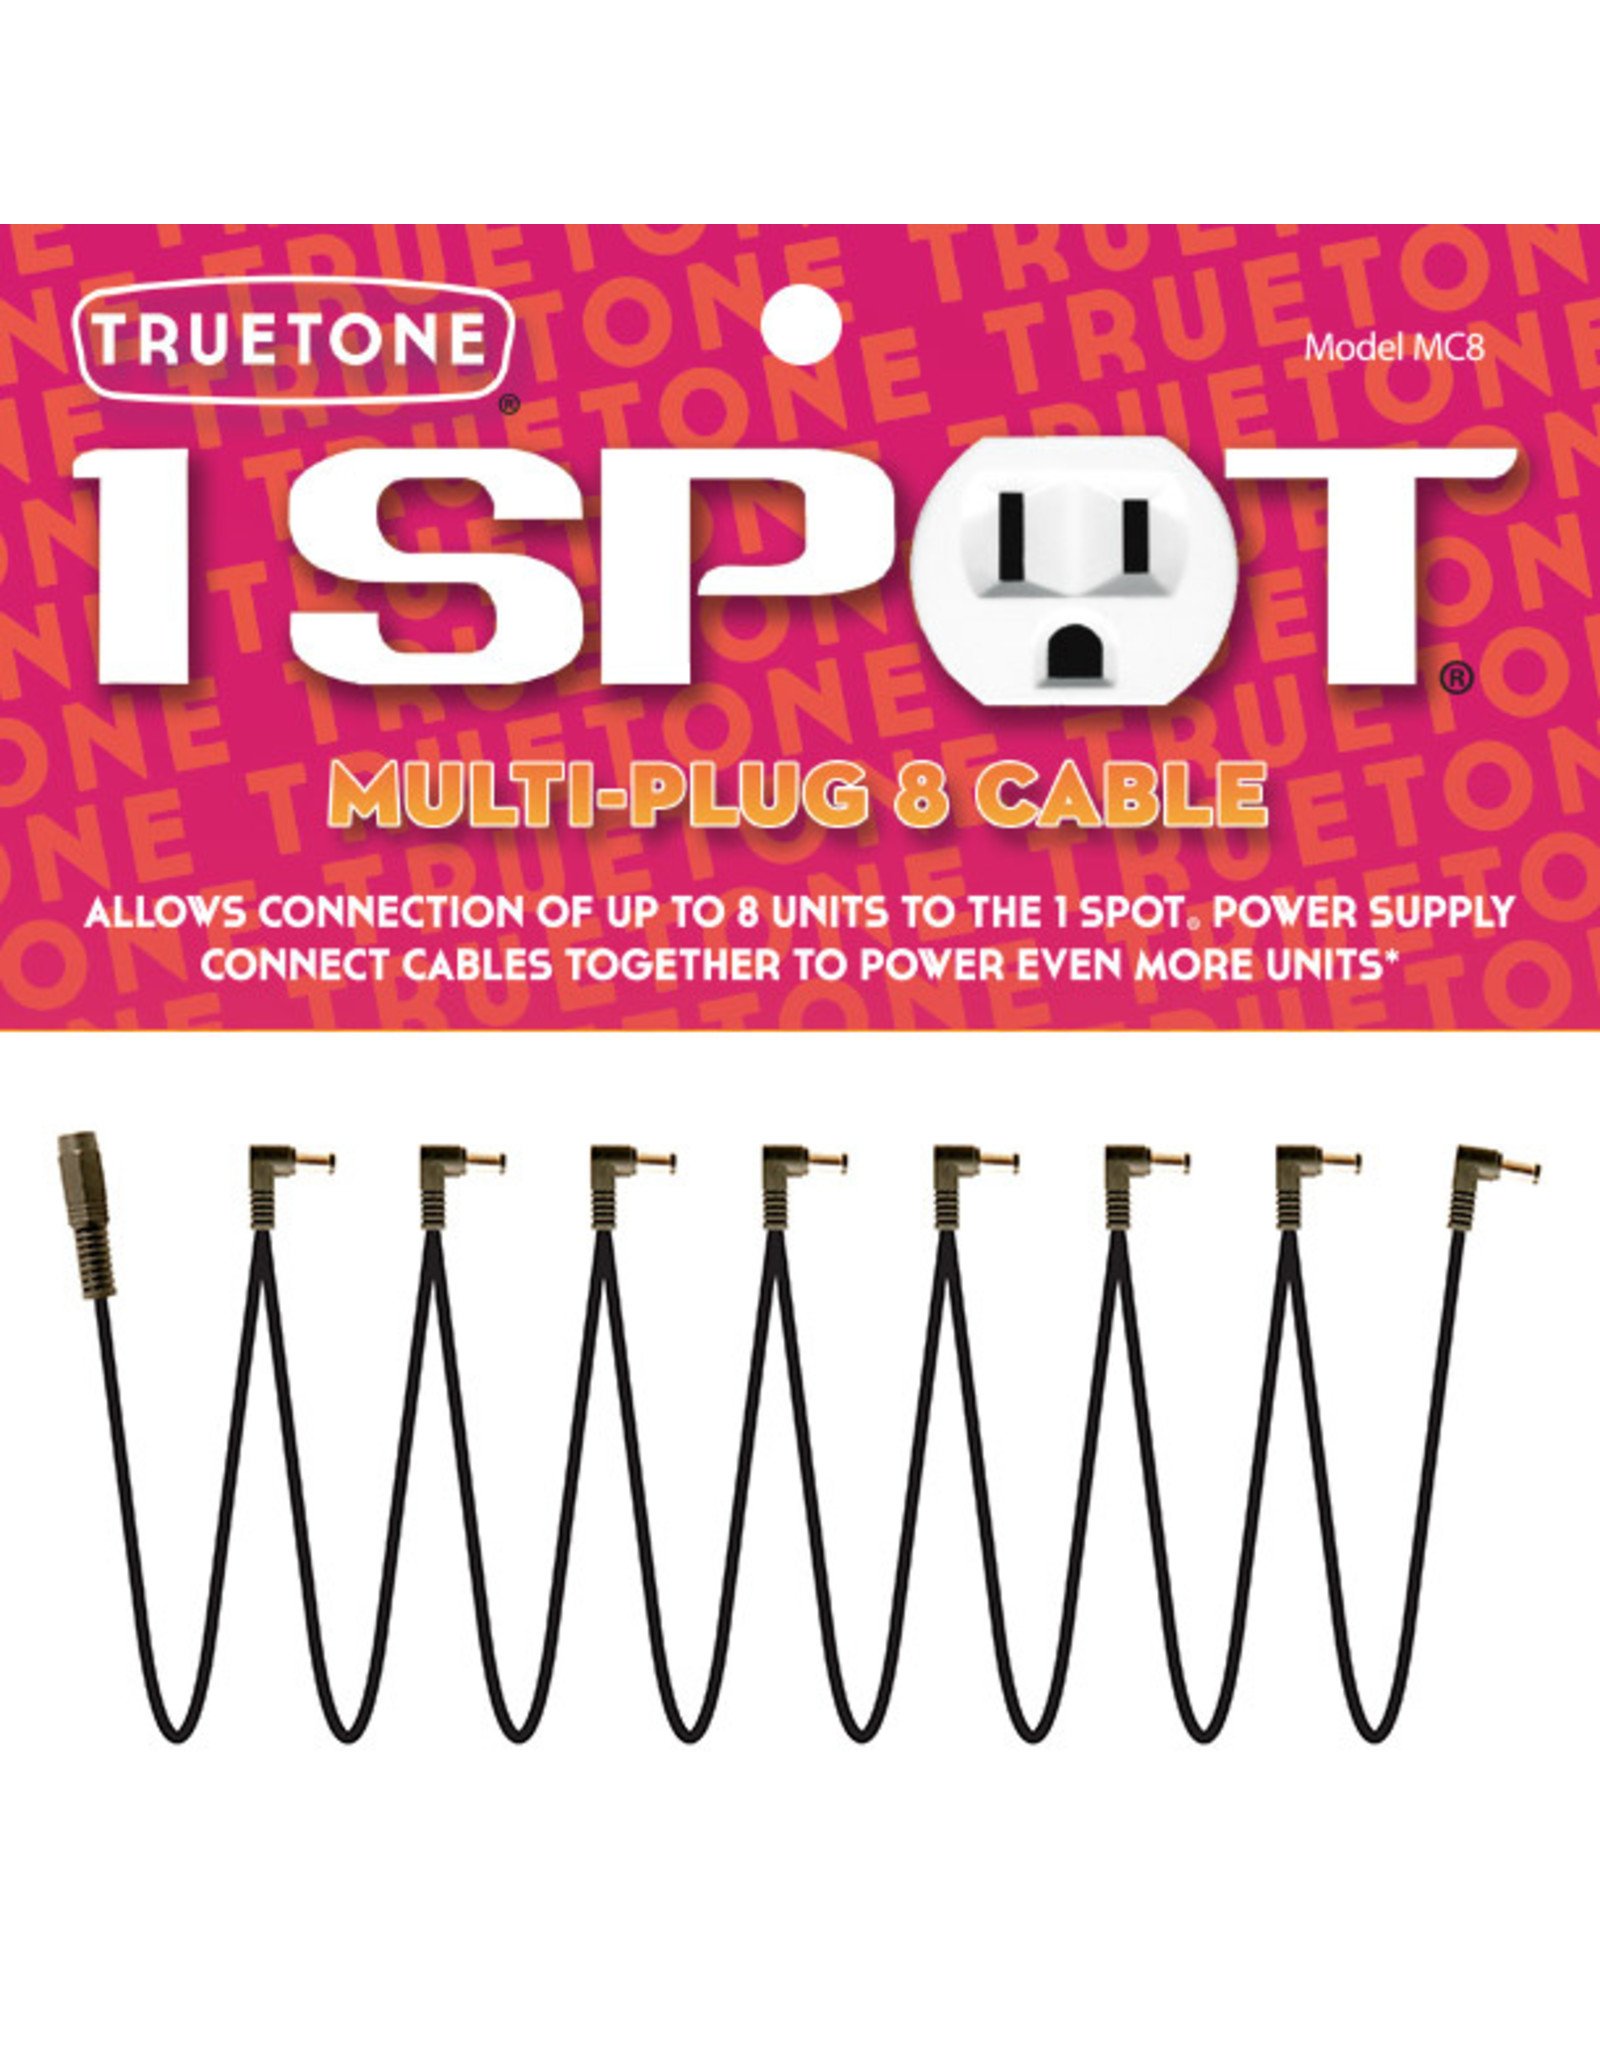 Truetone 1 SPOT MULTIPLUG 8 CABLE